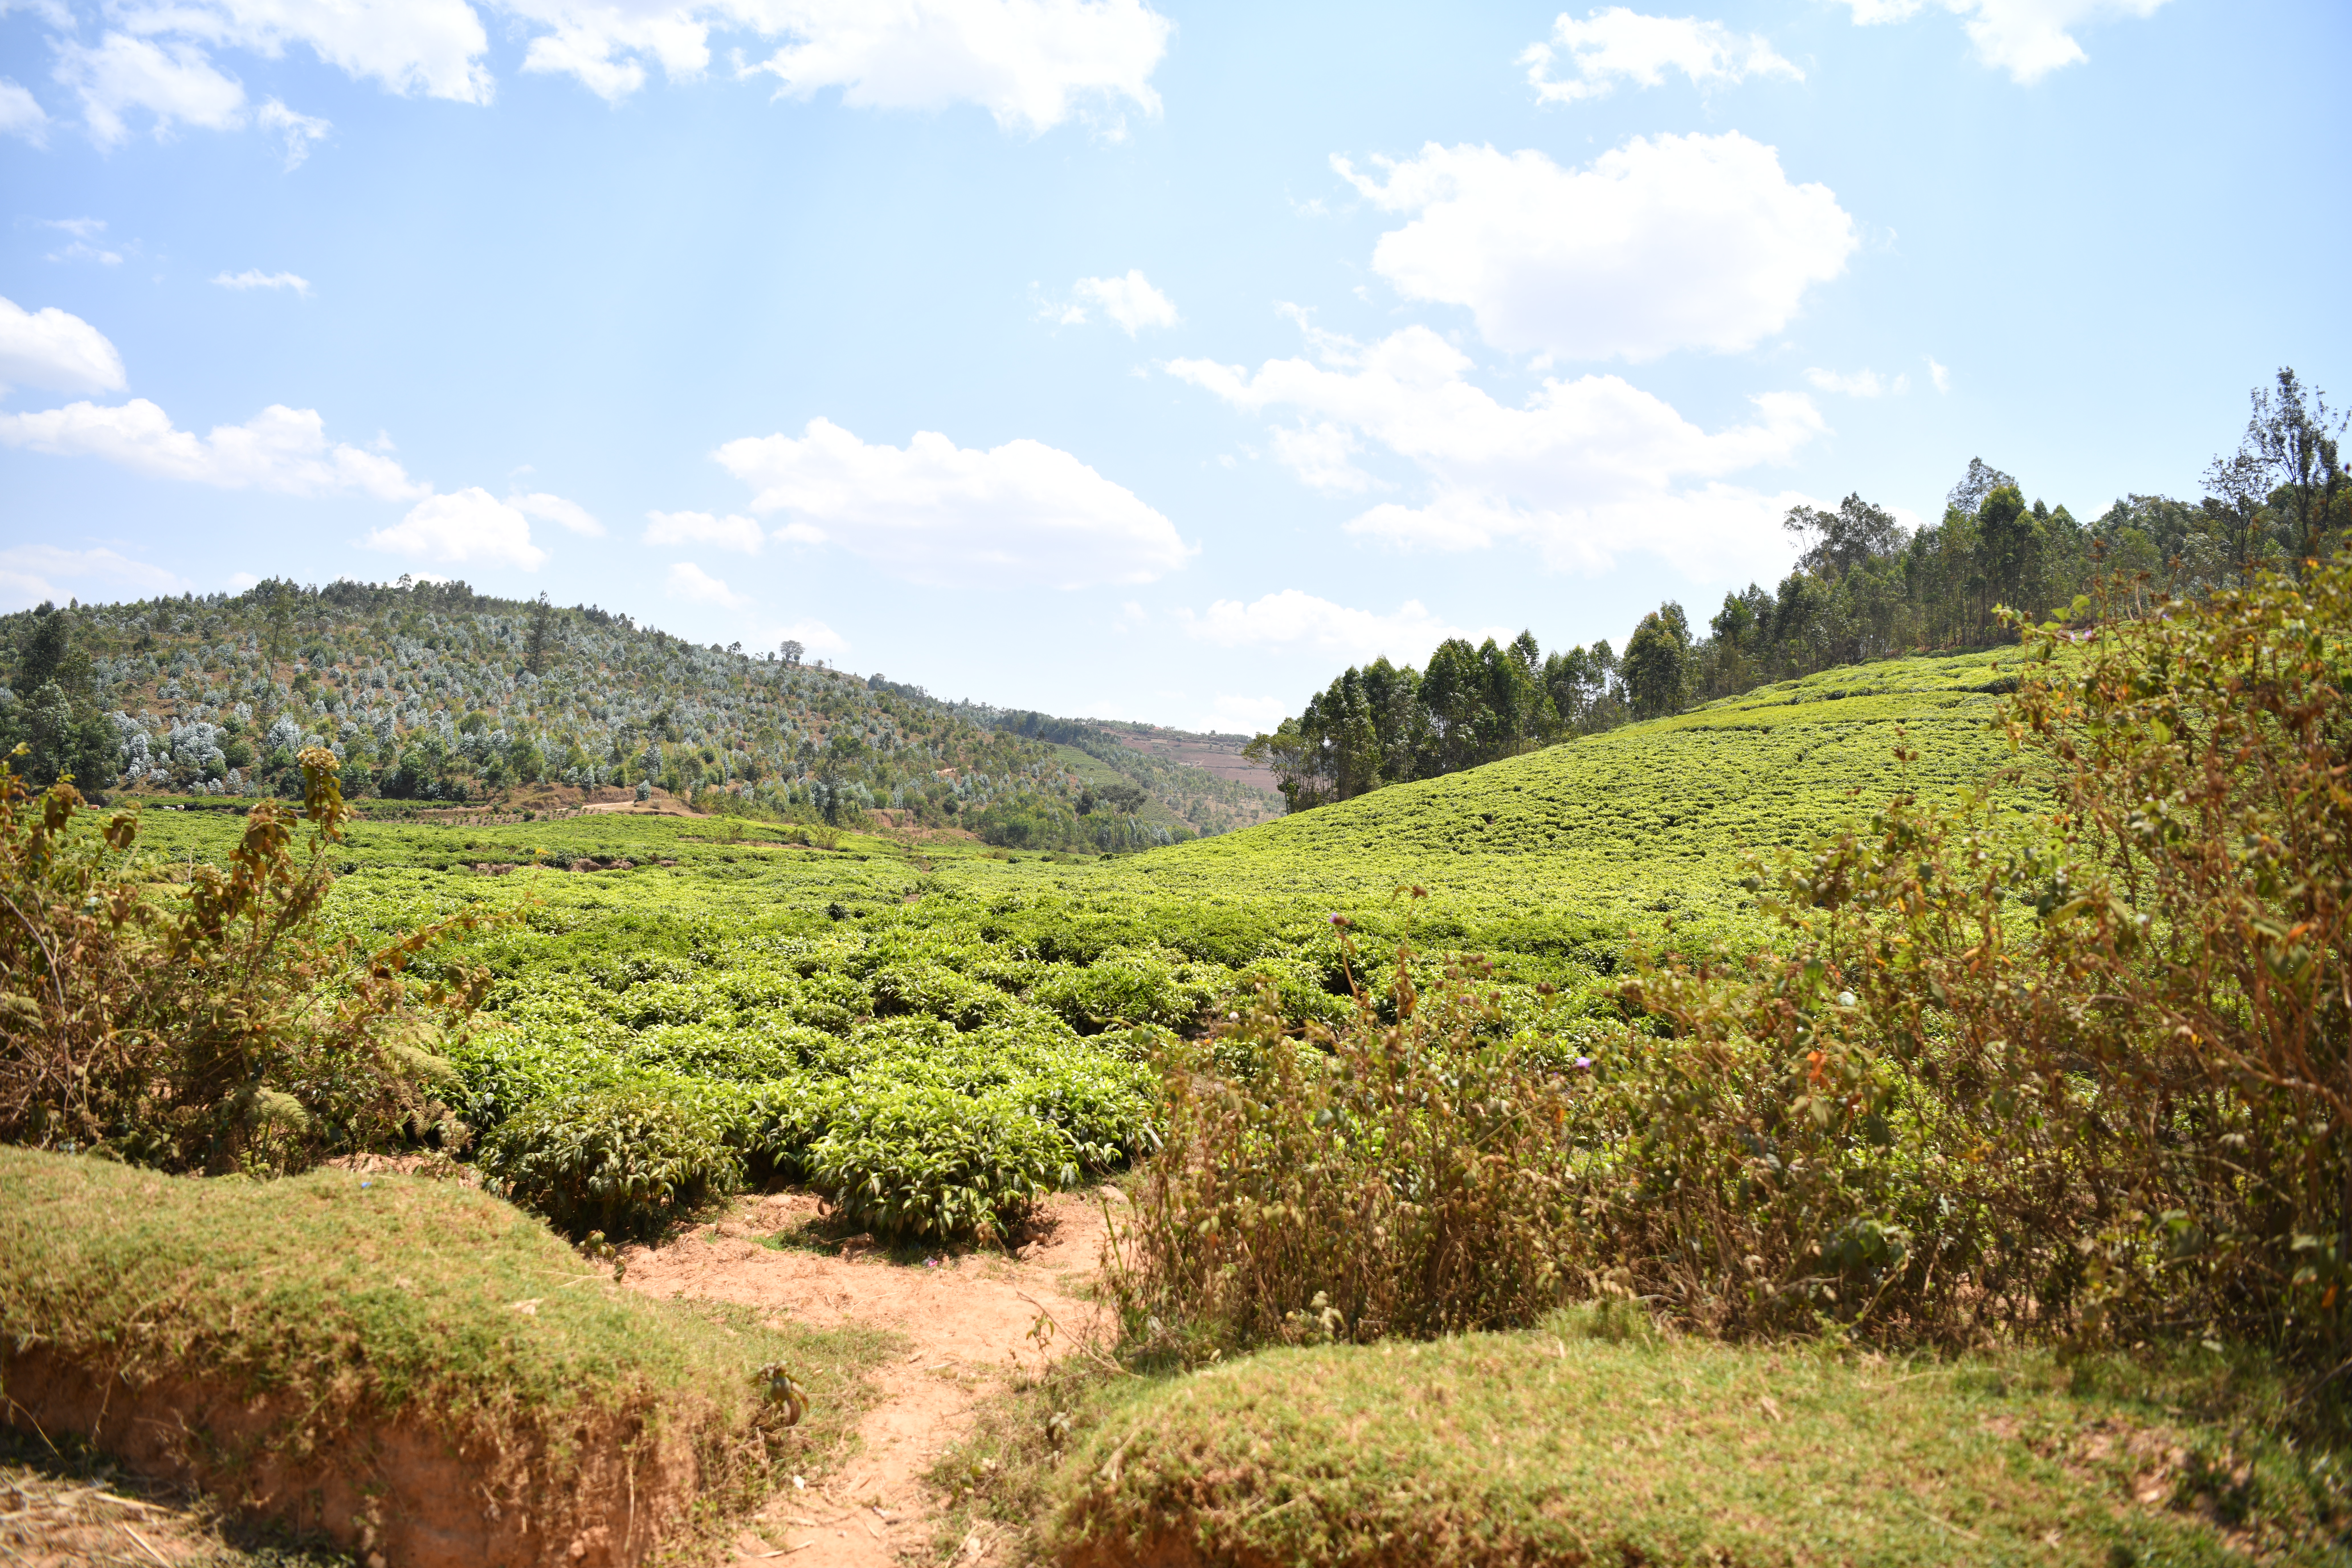 One of the tea plantations in Nyaruguru District, Rwanda.